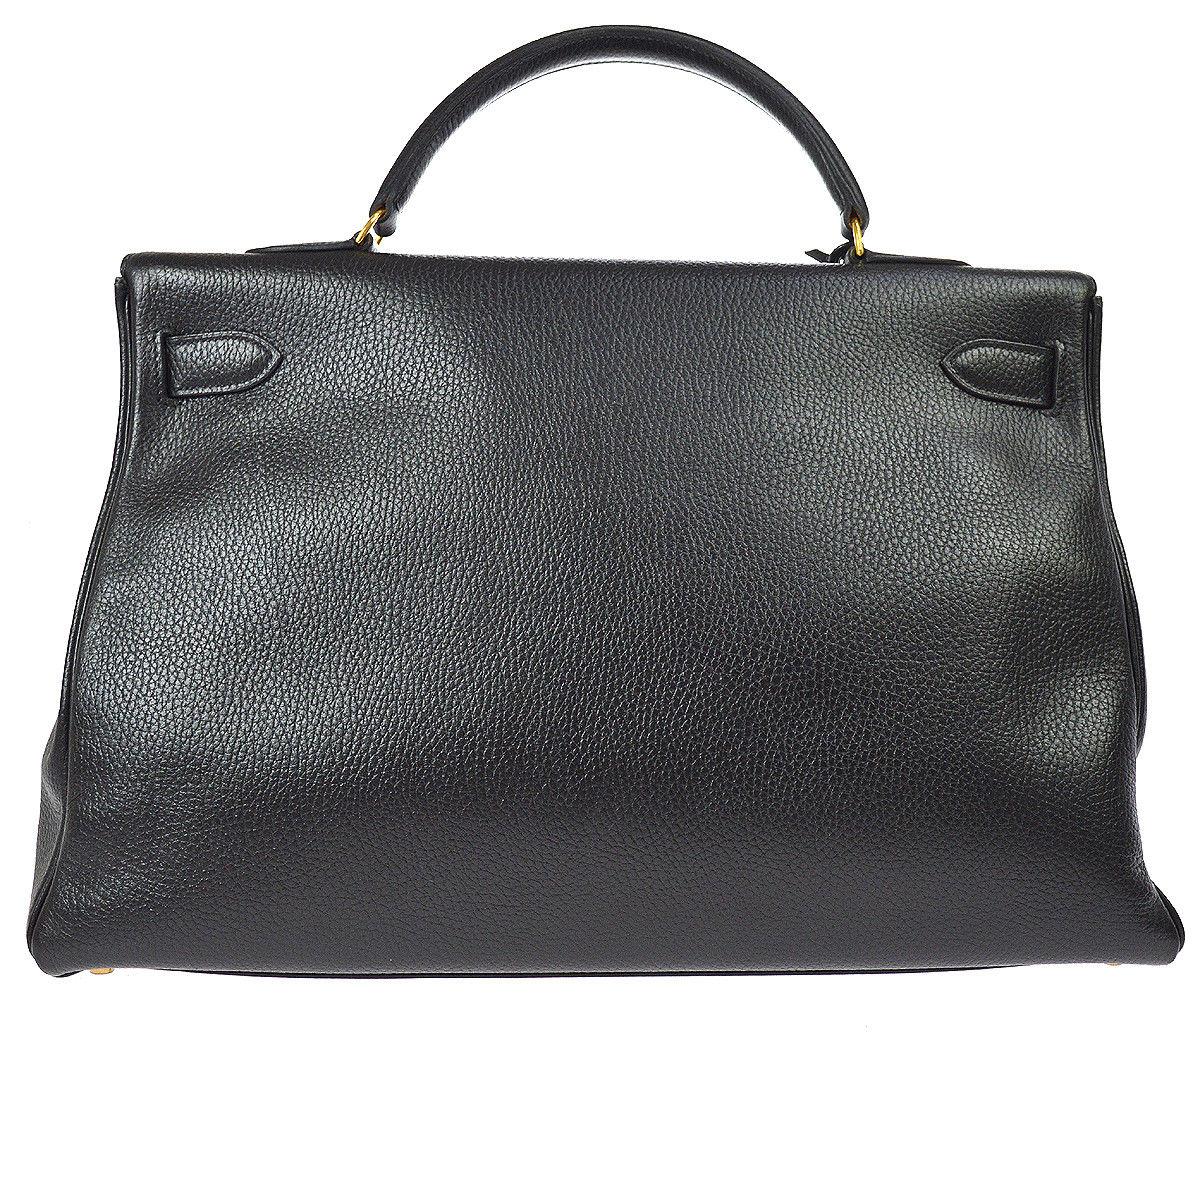 Women's or Men's Hermes Kelly 40 Black Leather Top Handle Satchel Carryall Tote Bag